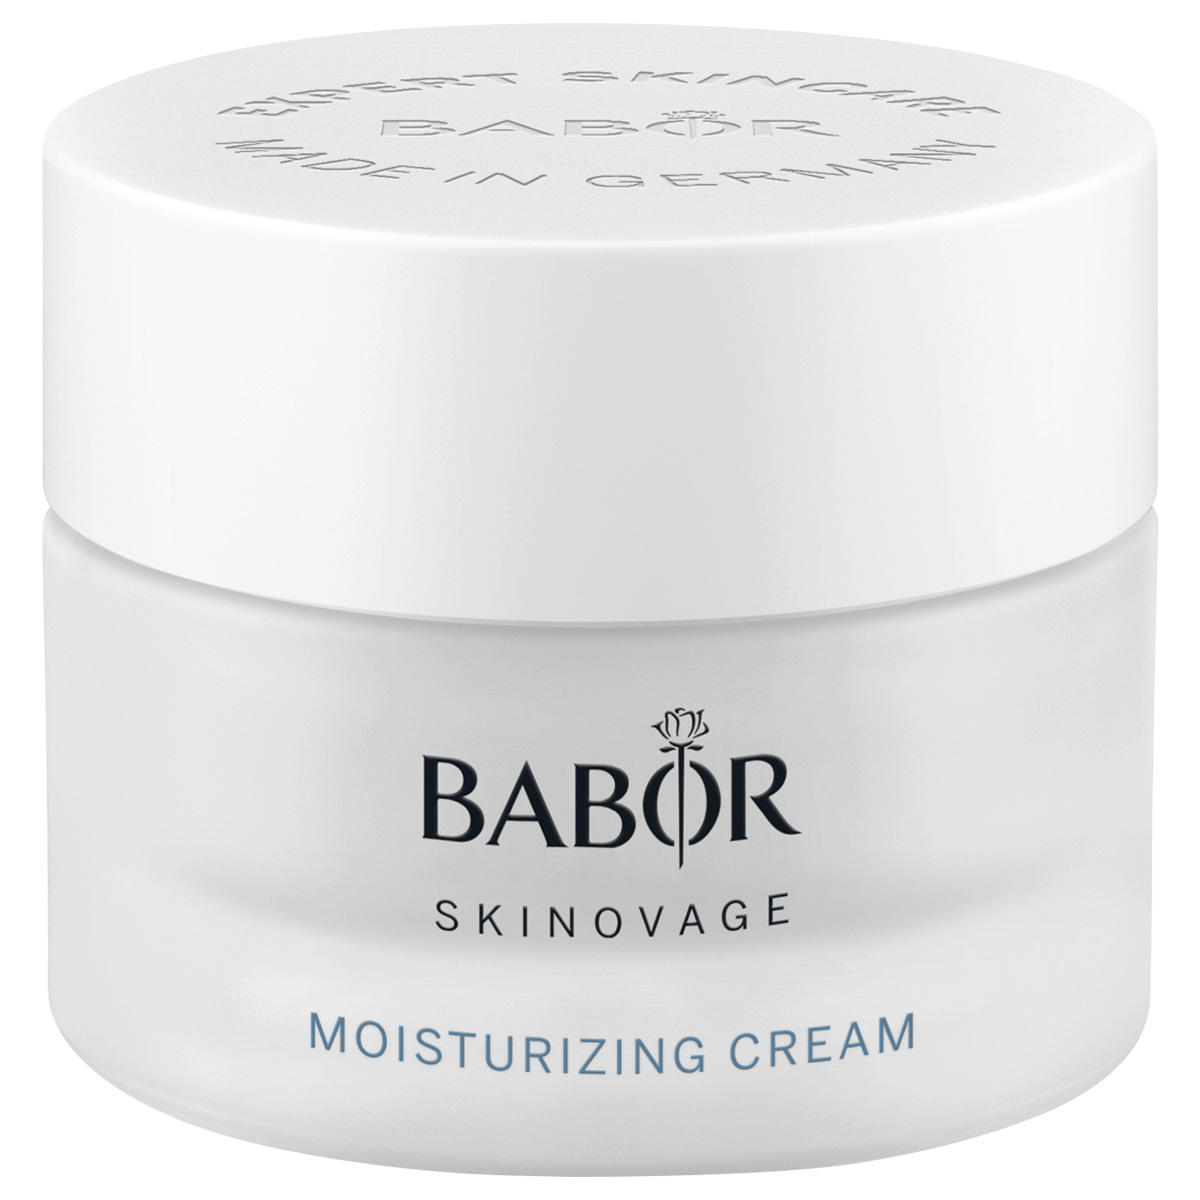 BABOR SKINOVAGE Moisturizing Cream  50 ml - 1